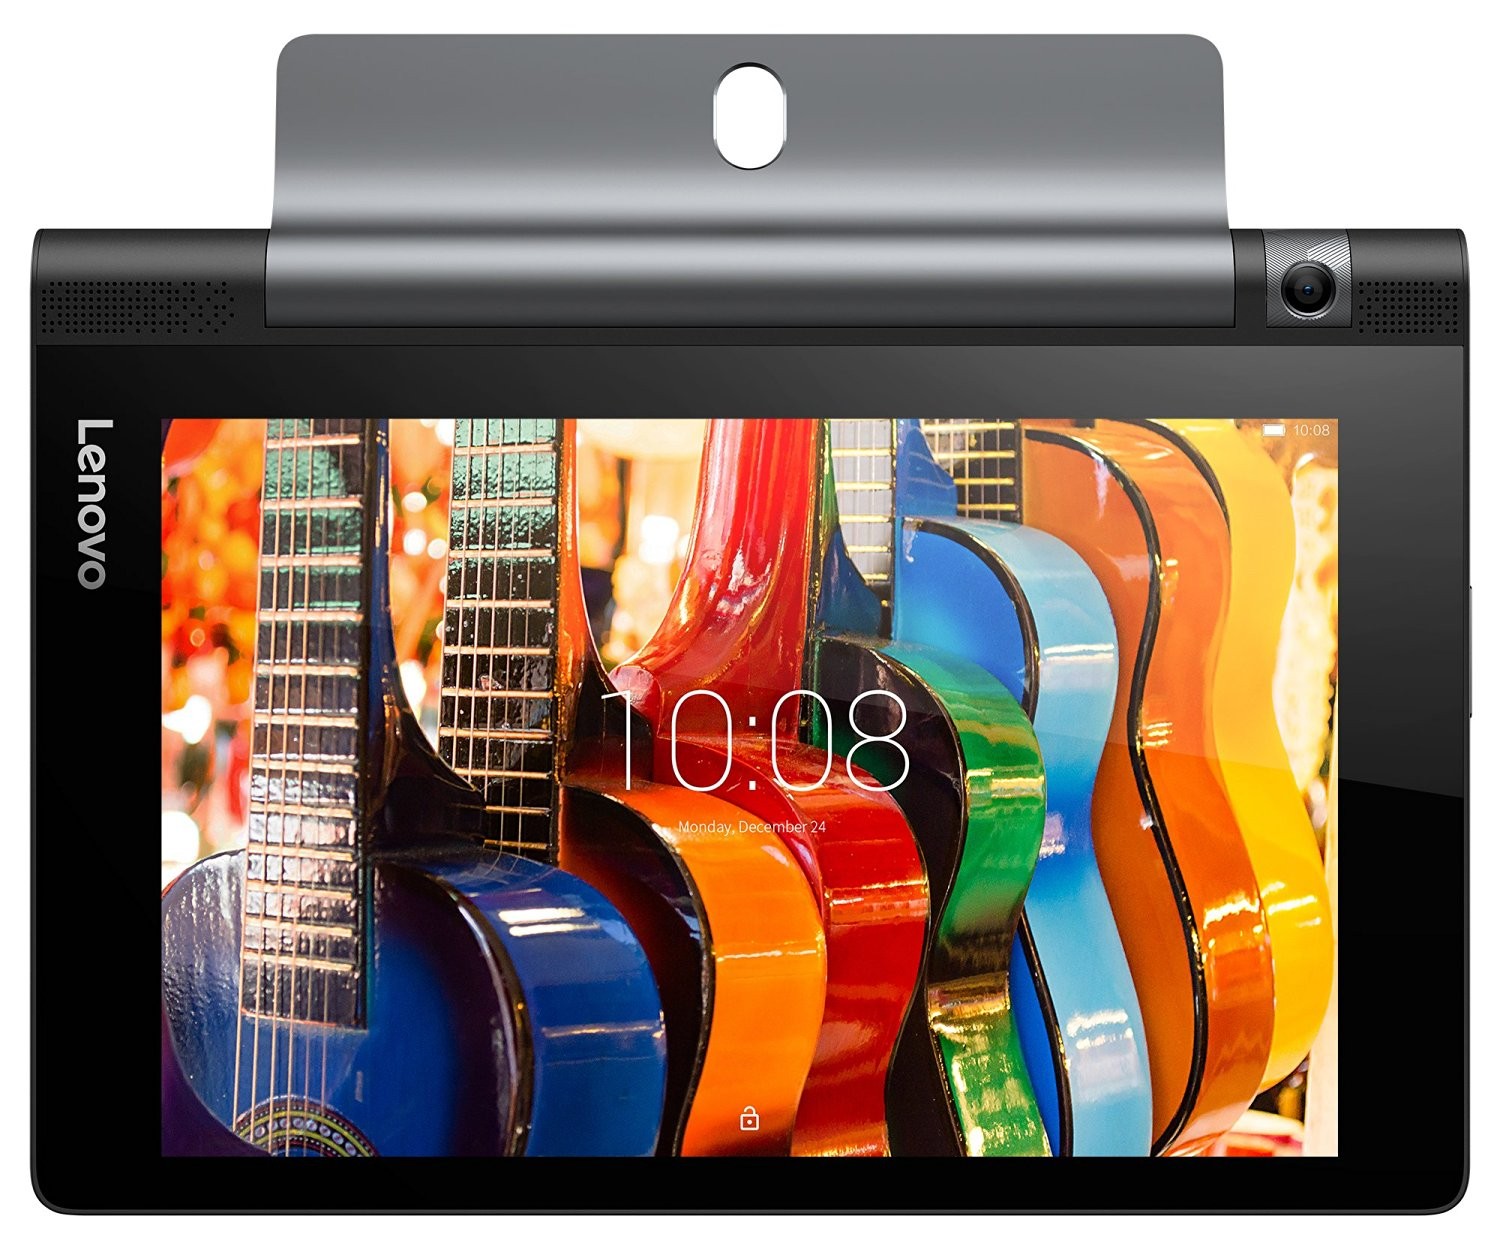 Lenovo Yoga Tab 3 8 Tablet (8 inch, 16GB, Wi-Fi + 4G LTE + Voice Calling), Slate Black 